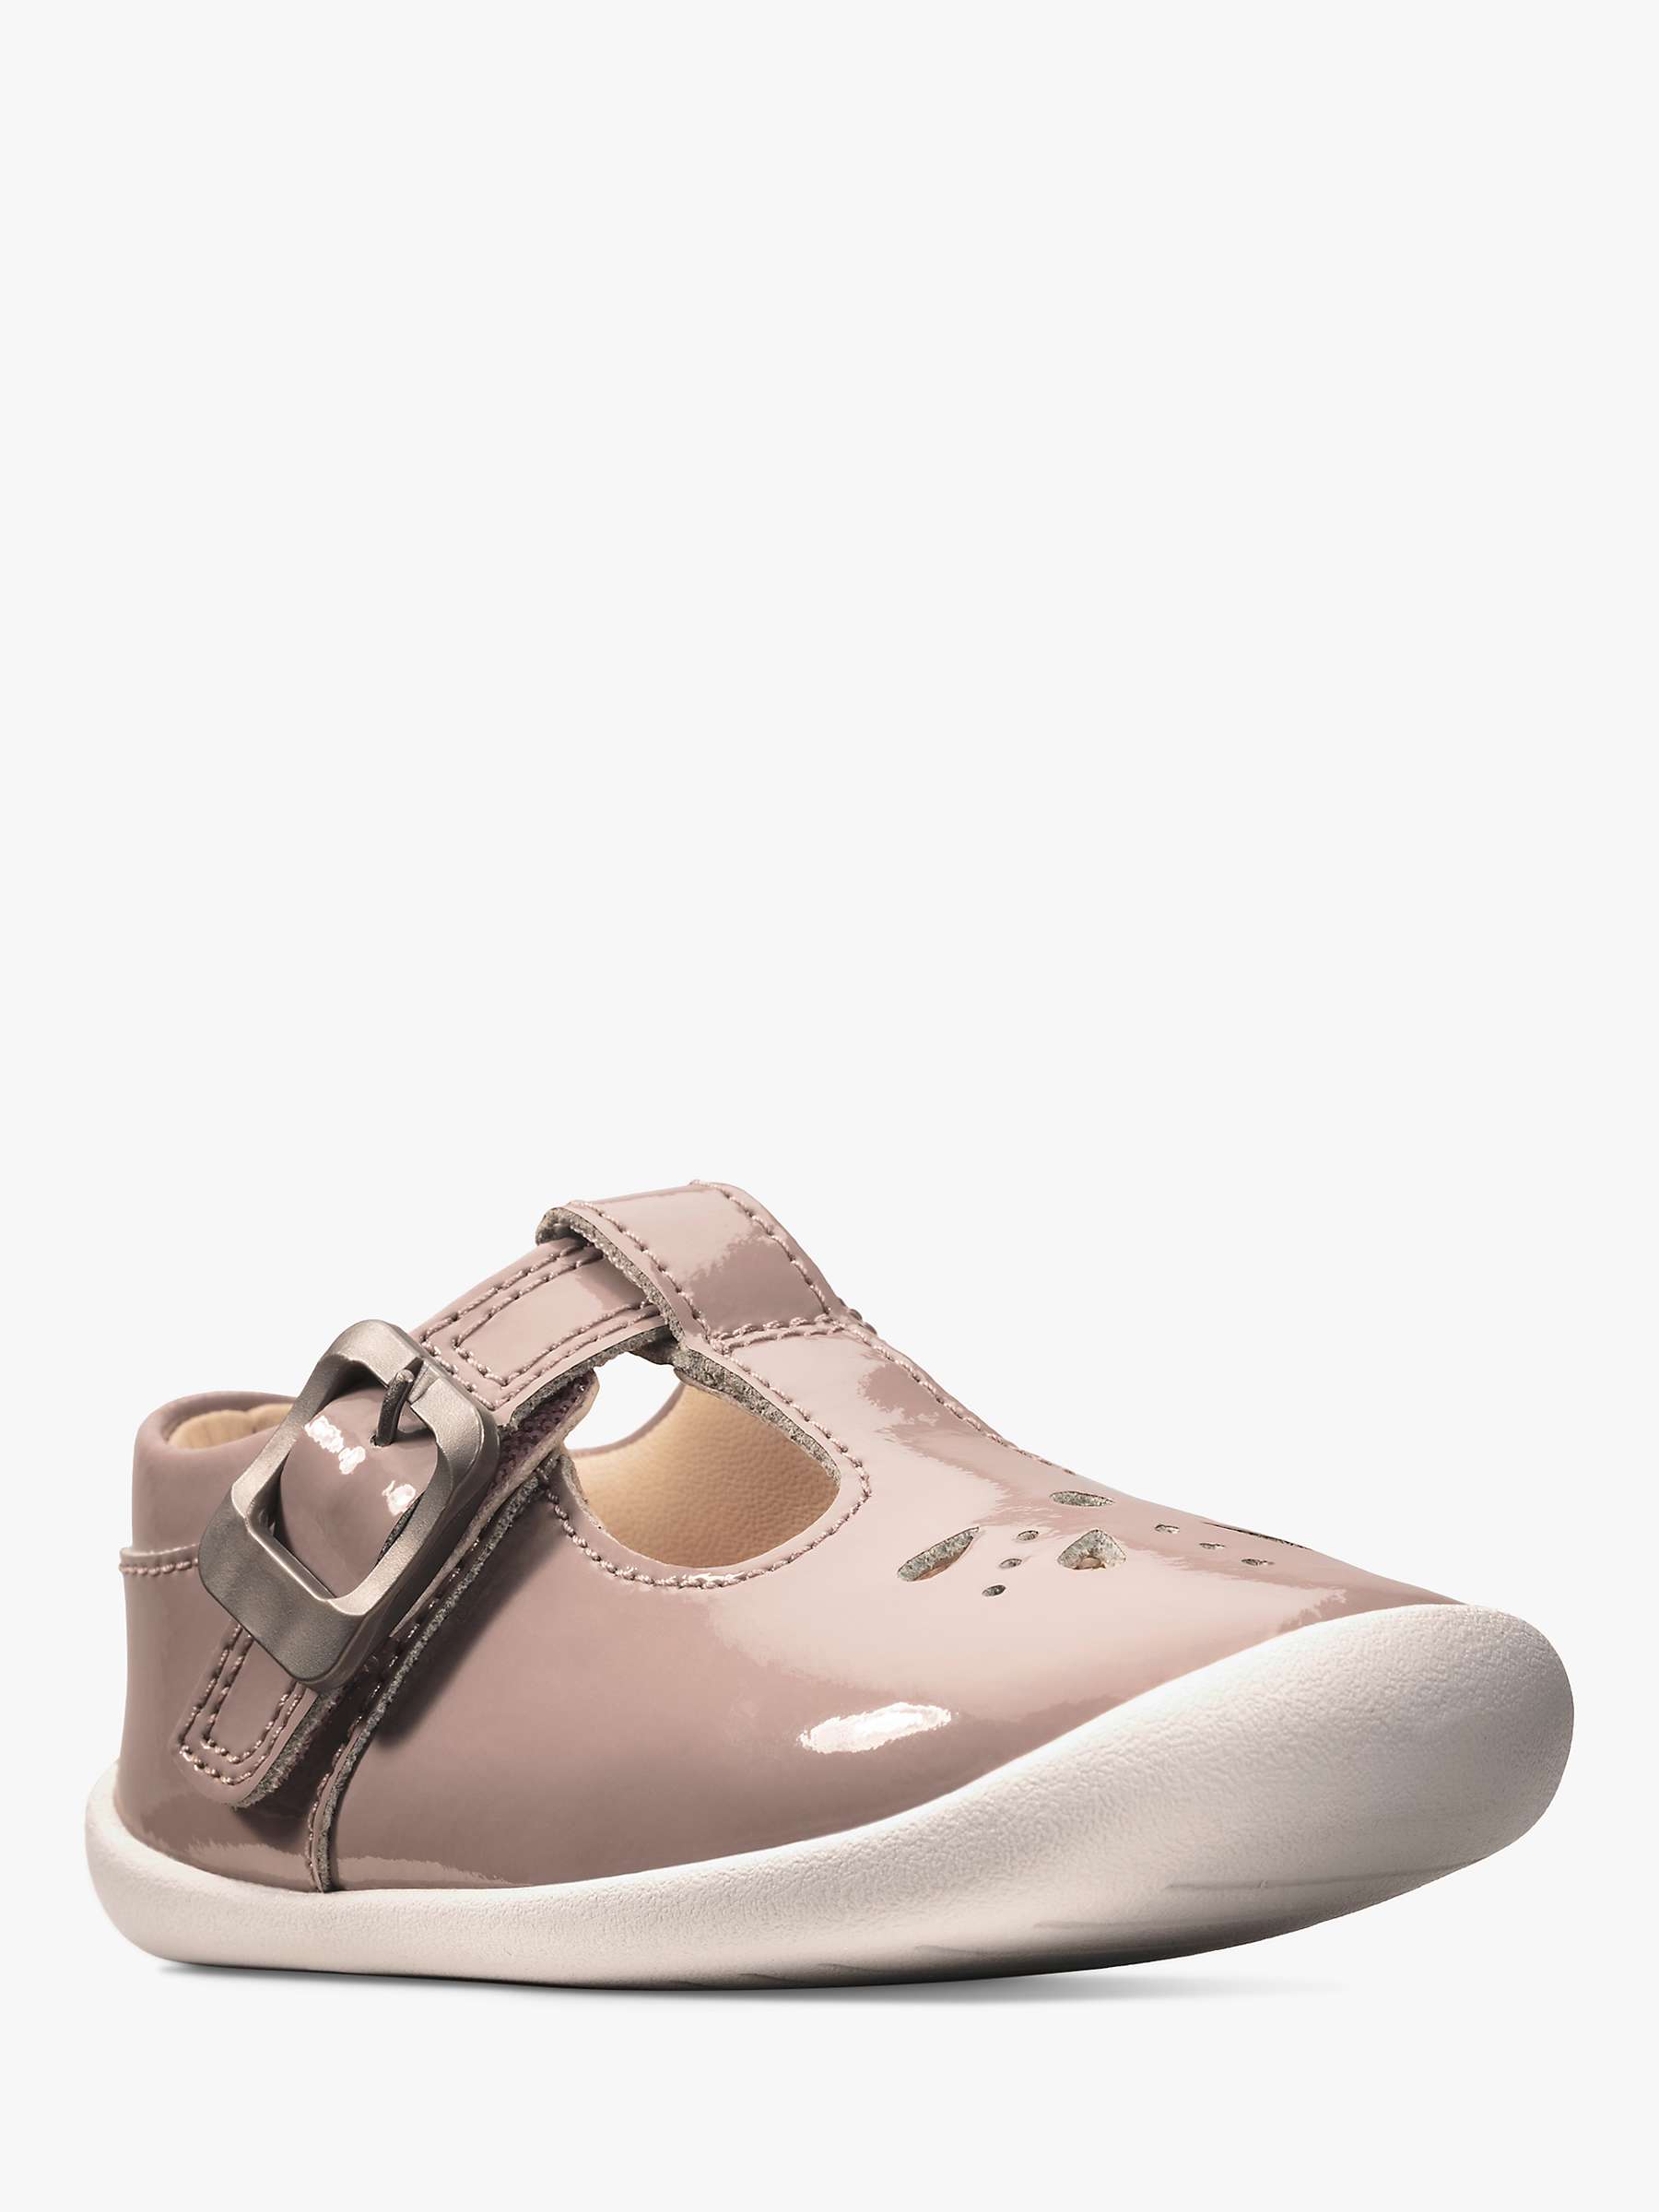 Buy Clarks Baby Roamer Star Shoes, Pink Online at johnlewis.com